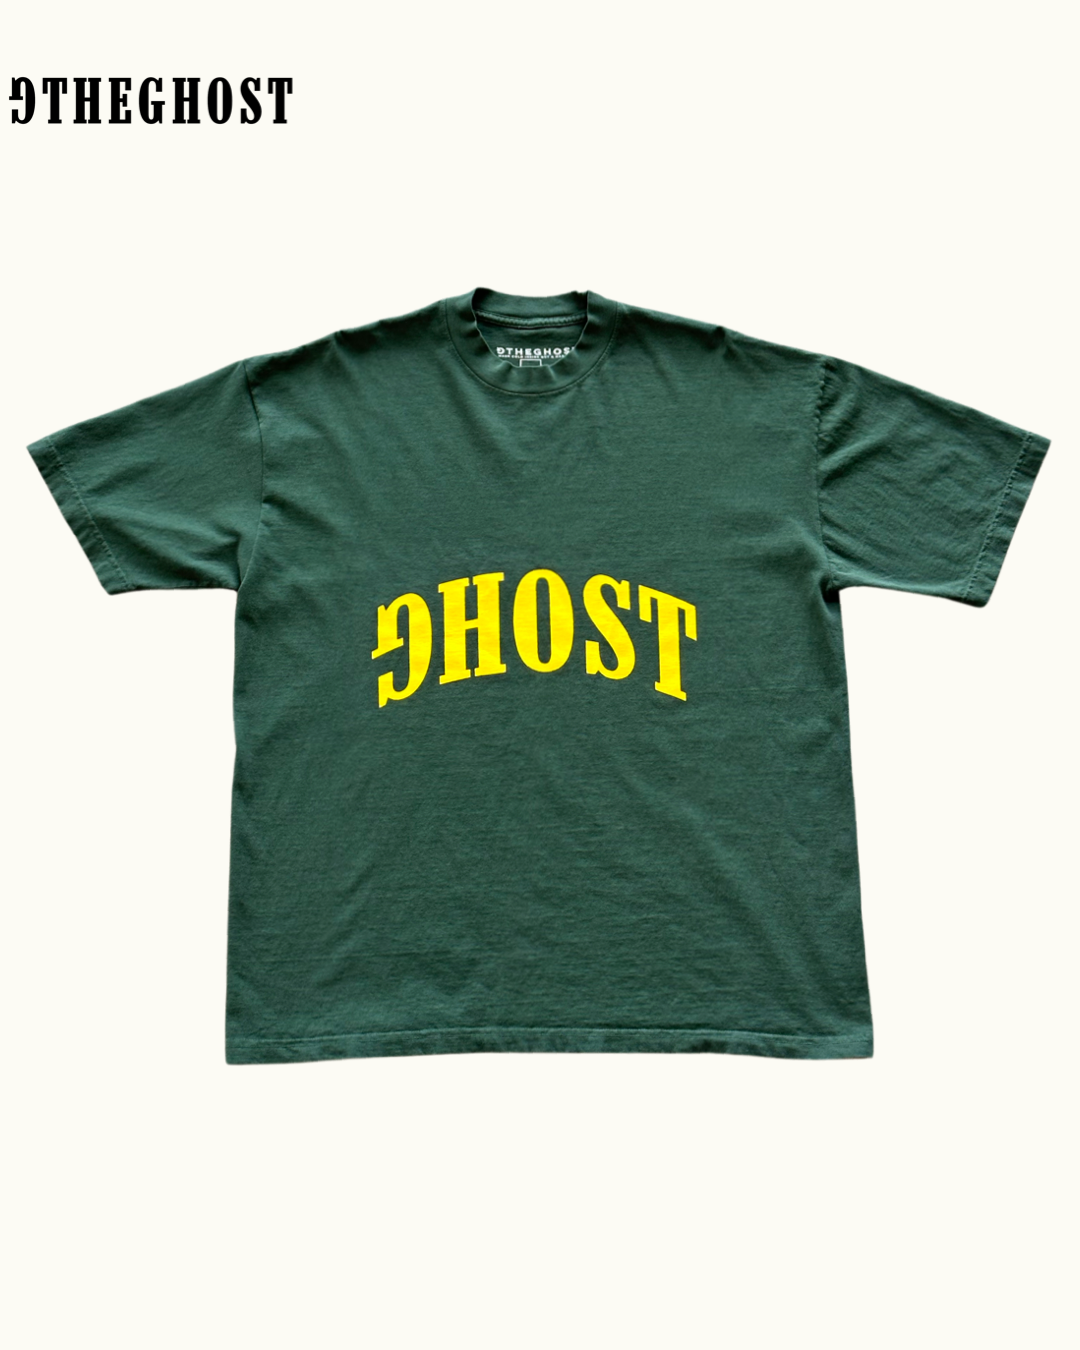 Ghost Tee (Green/Yellow)